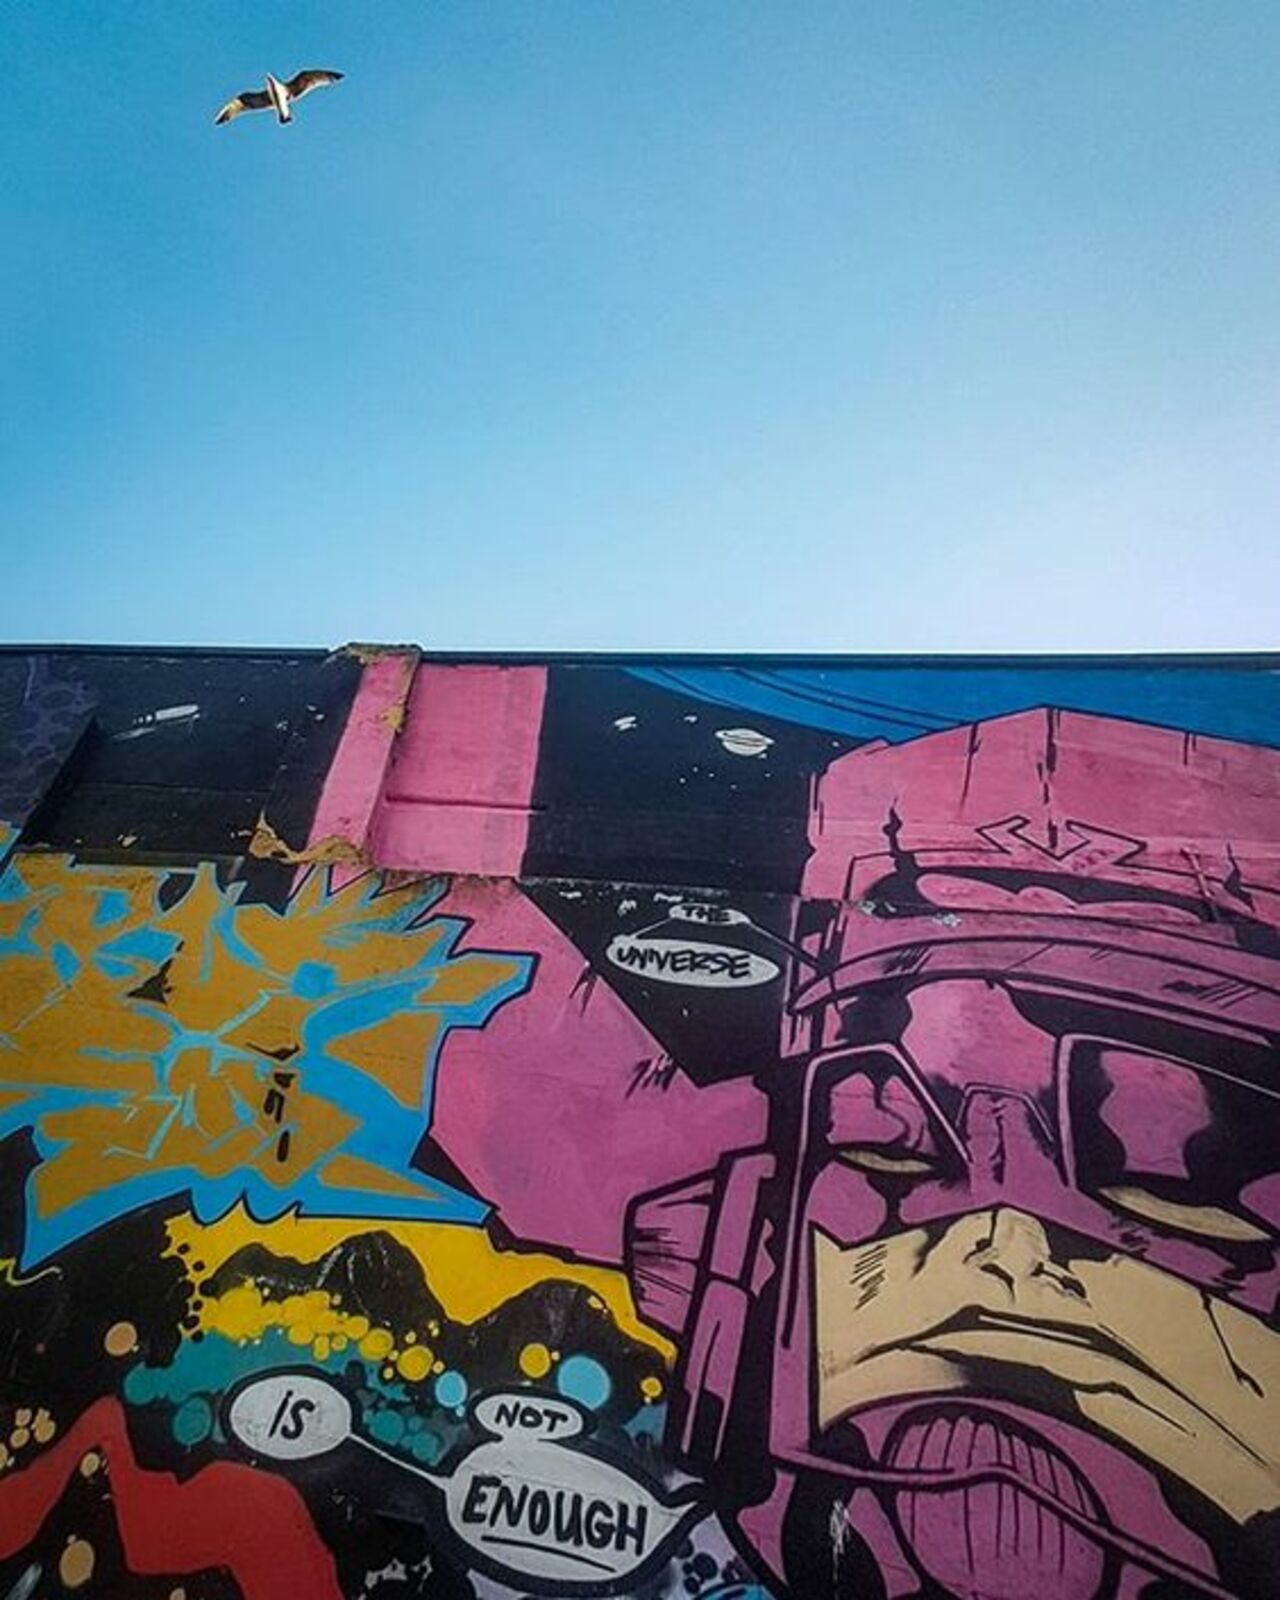 Galactus Mural- IDK the Artist #streetart #art #graffiti #mural https://t.co/wuol45ANpR